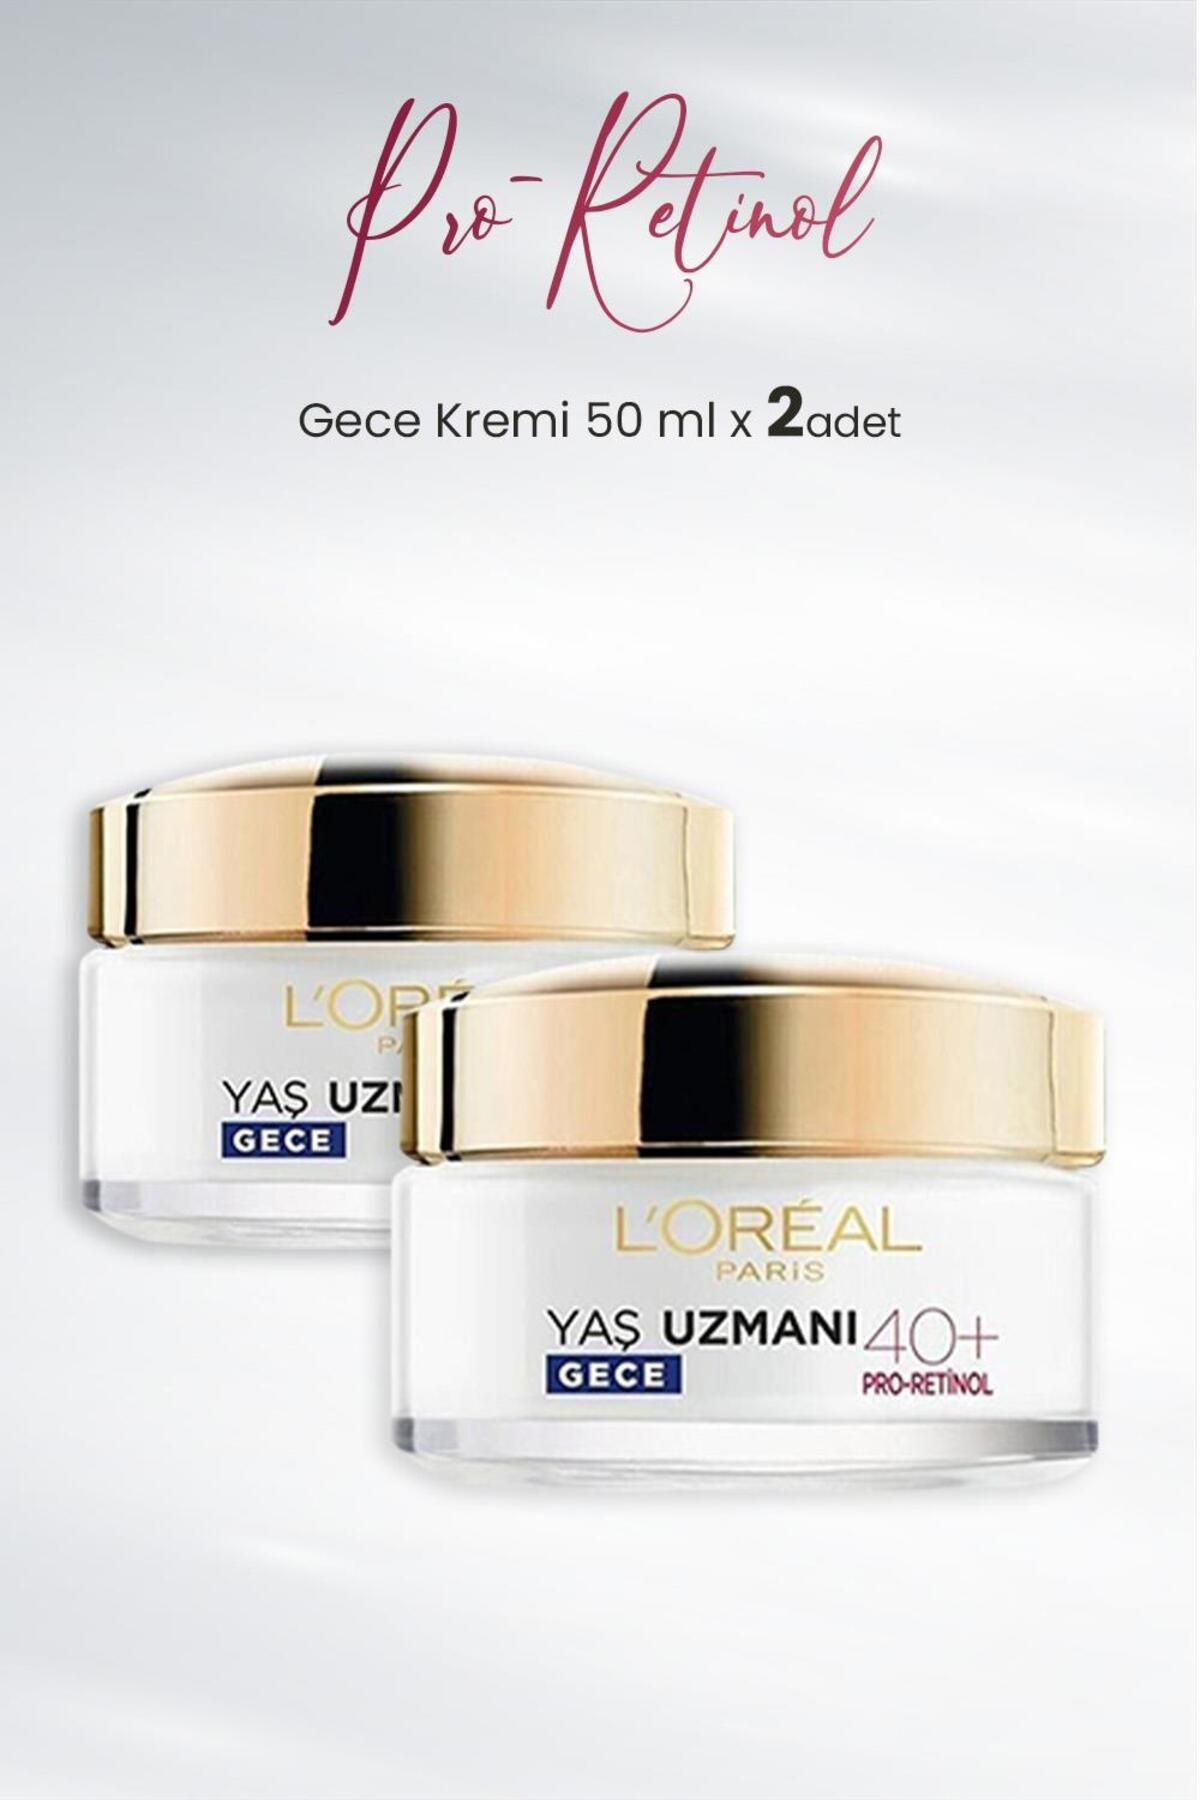 L'Oreal Paris Gece Kremi 40+ Pro-retinol 50 Ml X 2 Adet